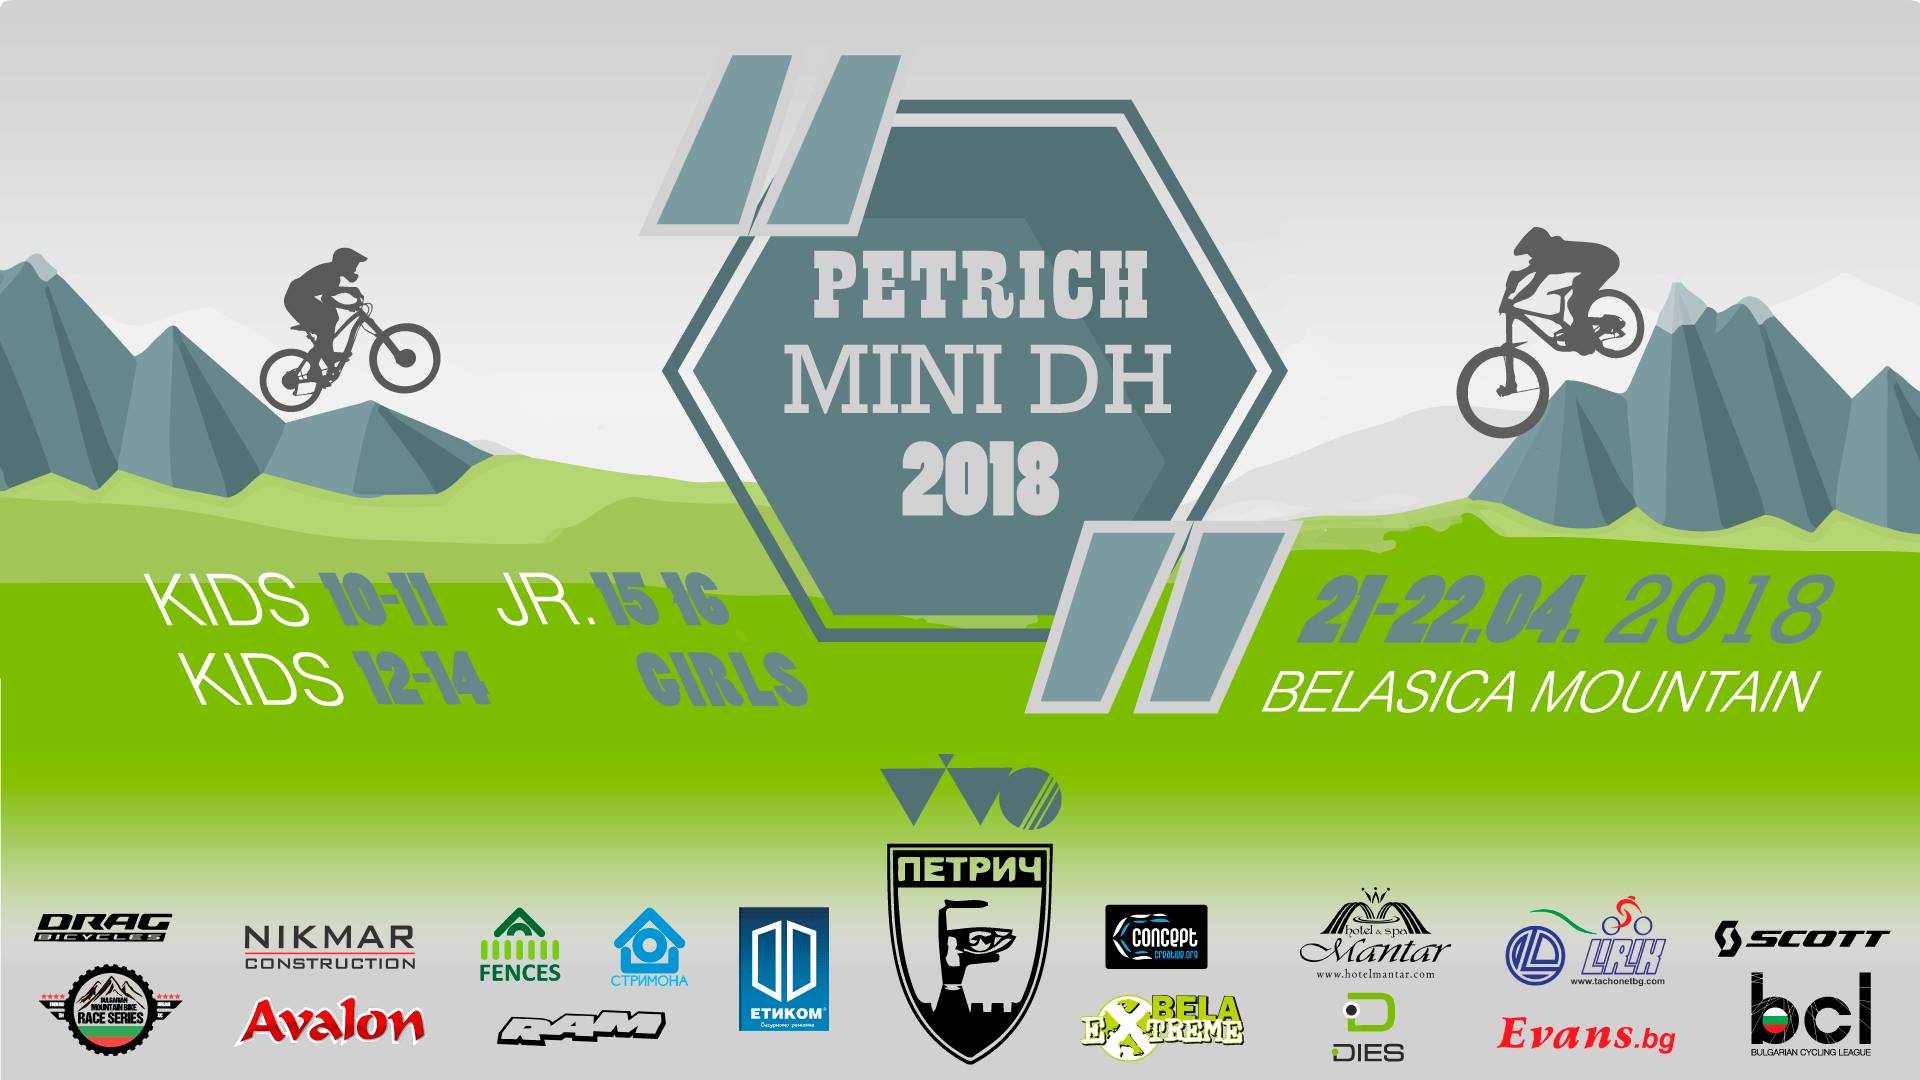 Petrich Mini Downhill